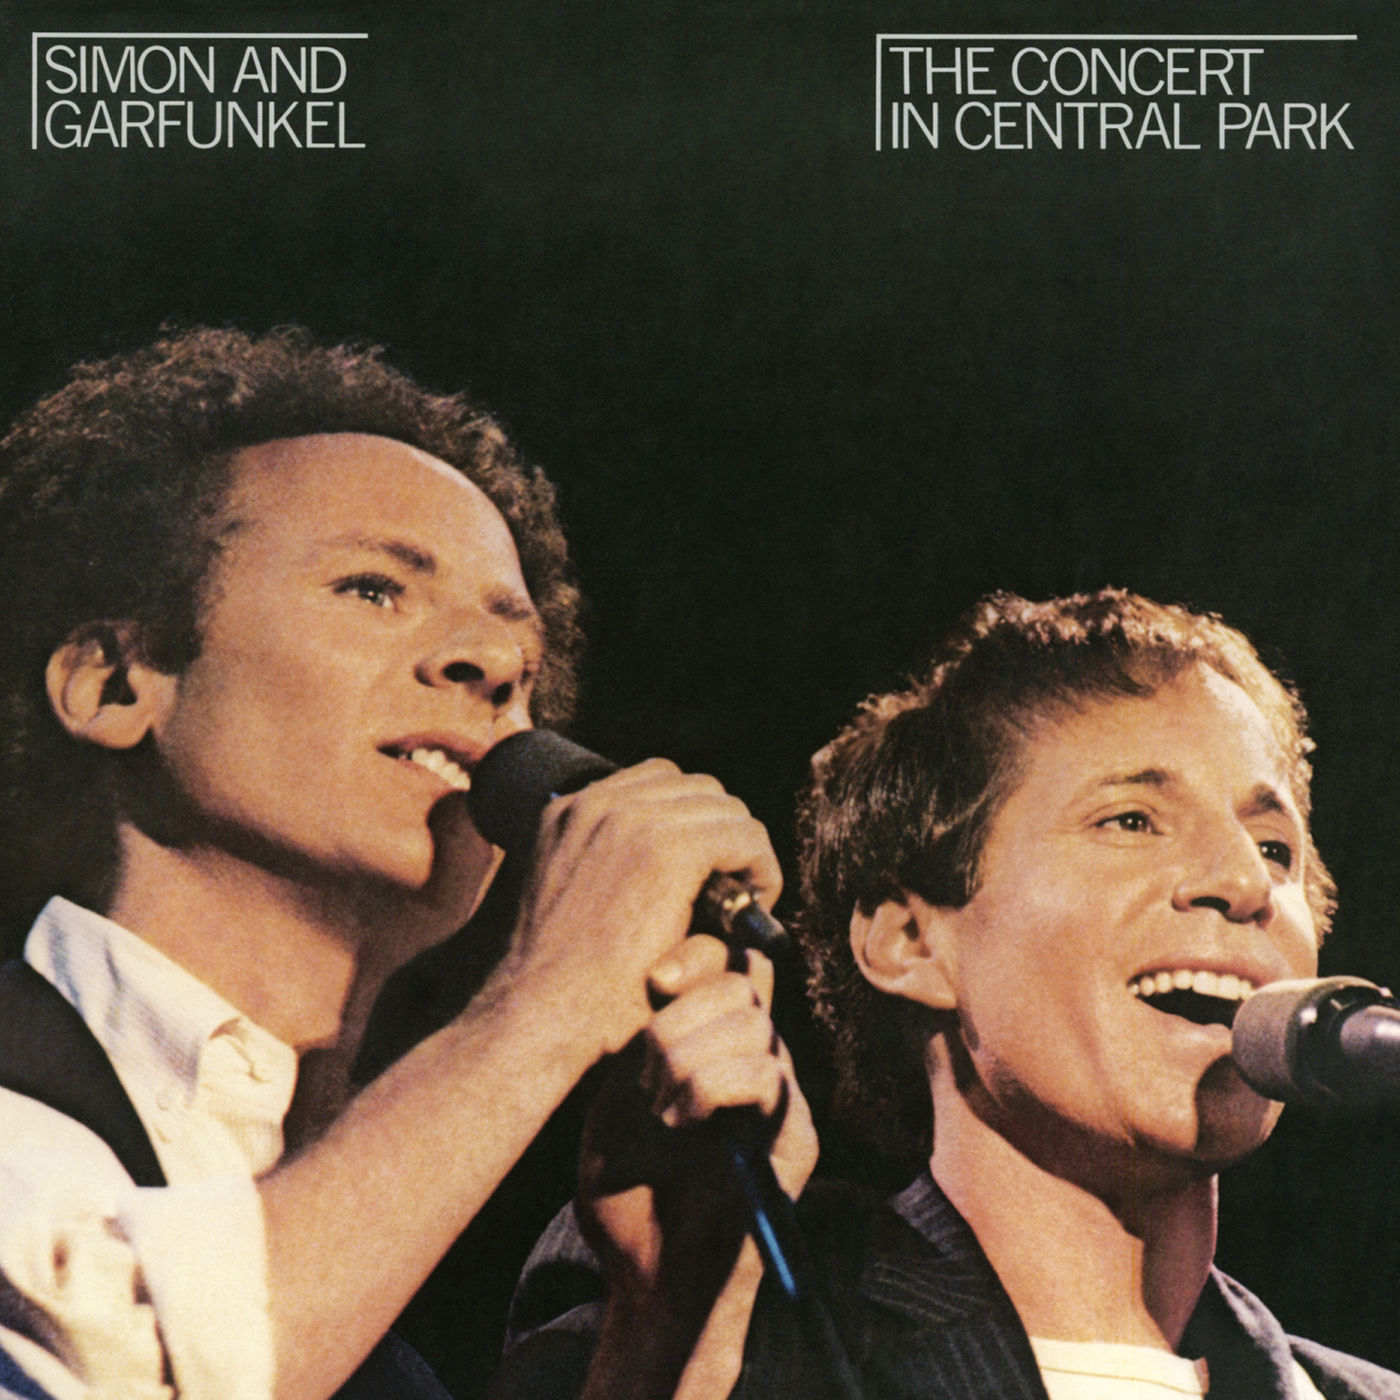 Simon & Garfunkel – The Concert in Central Park (Live)